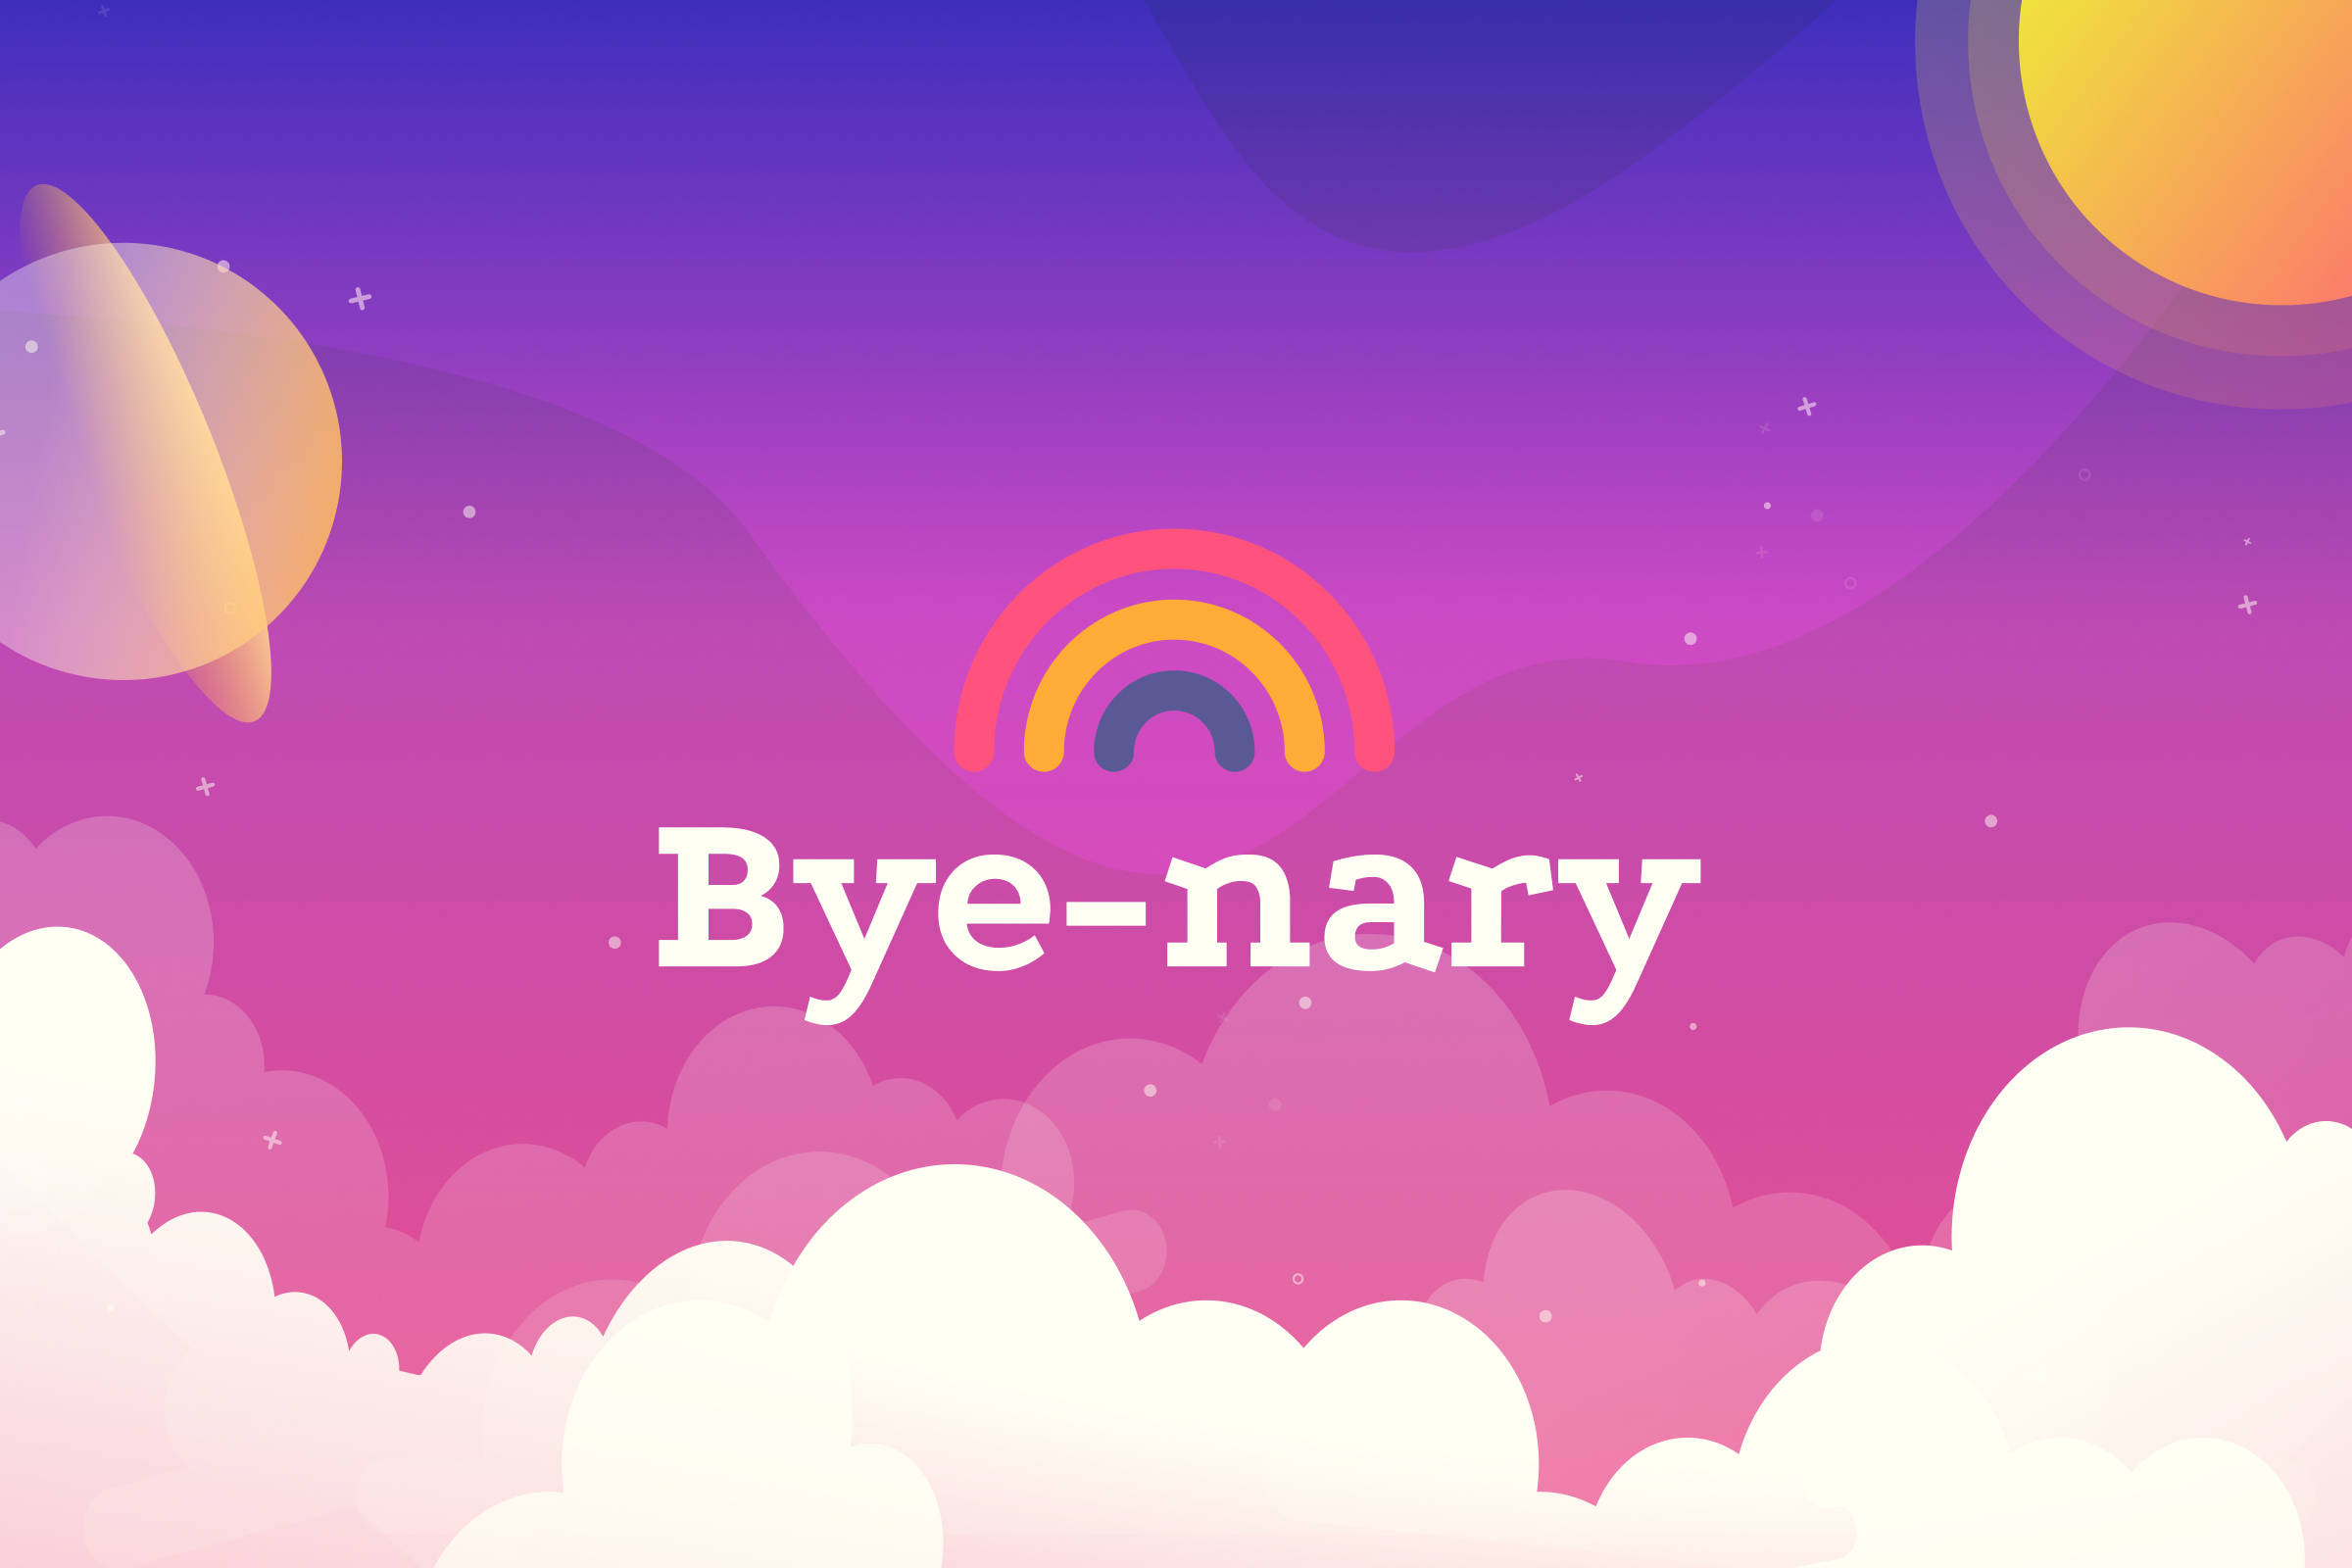 bye-nary project logo image